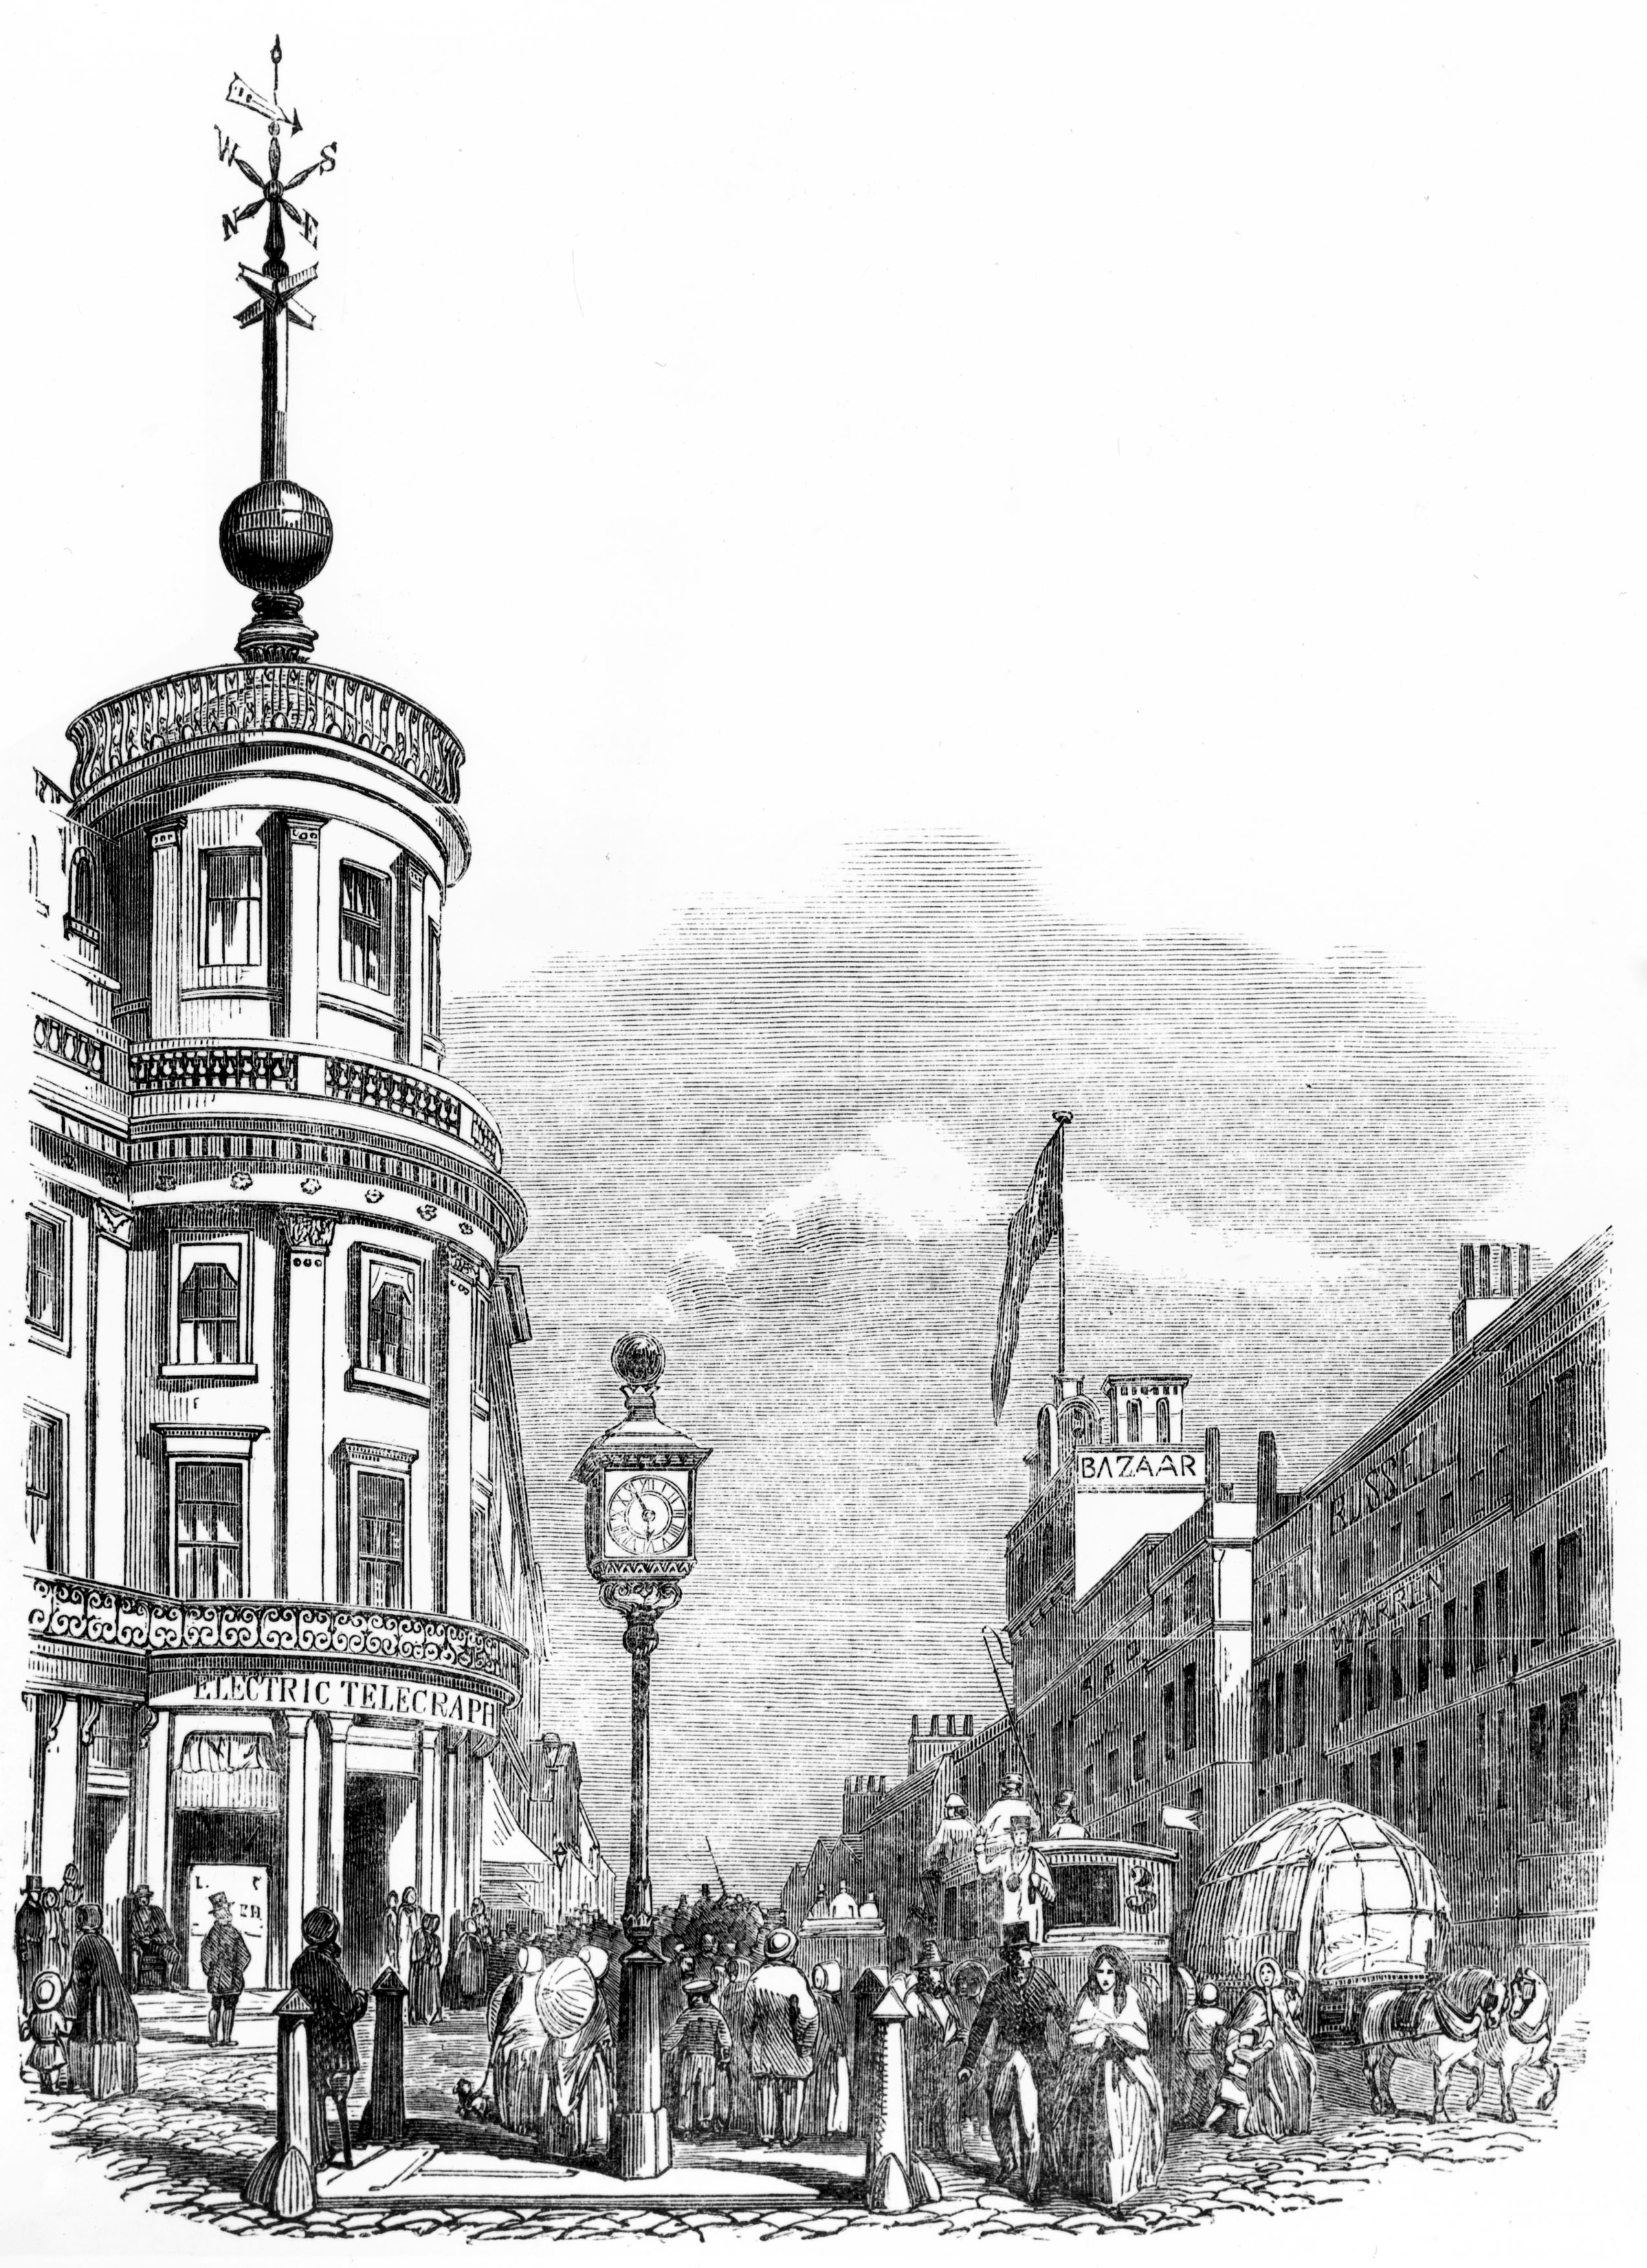 Telegraph time ball, Strand, London, 1852.